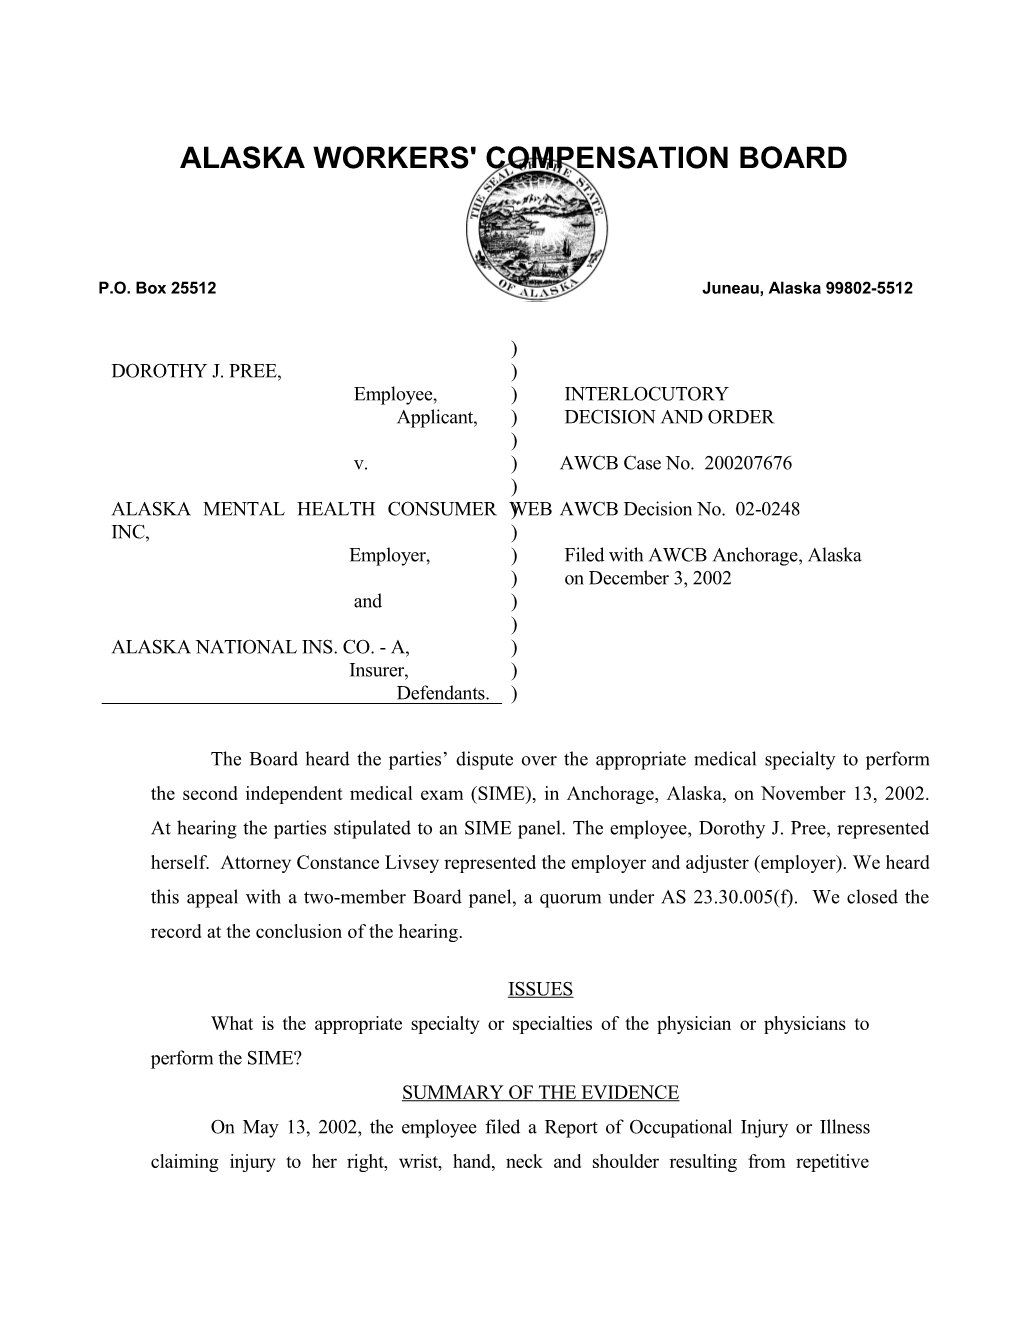 Alaska Workers' Compensation Board s61